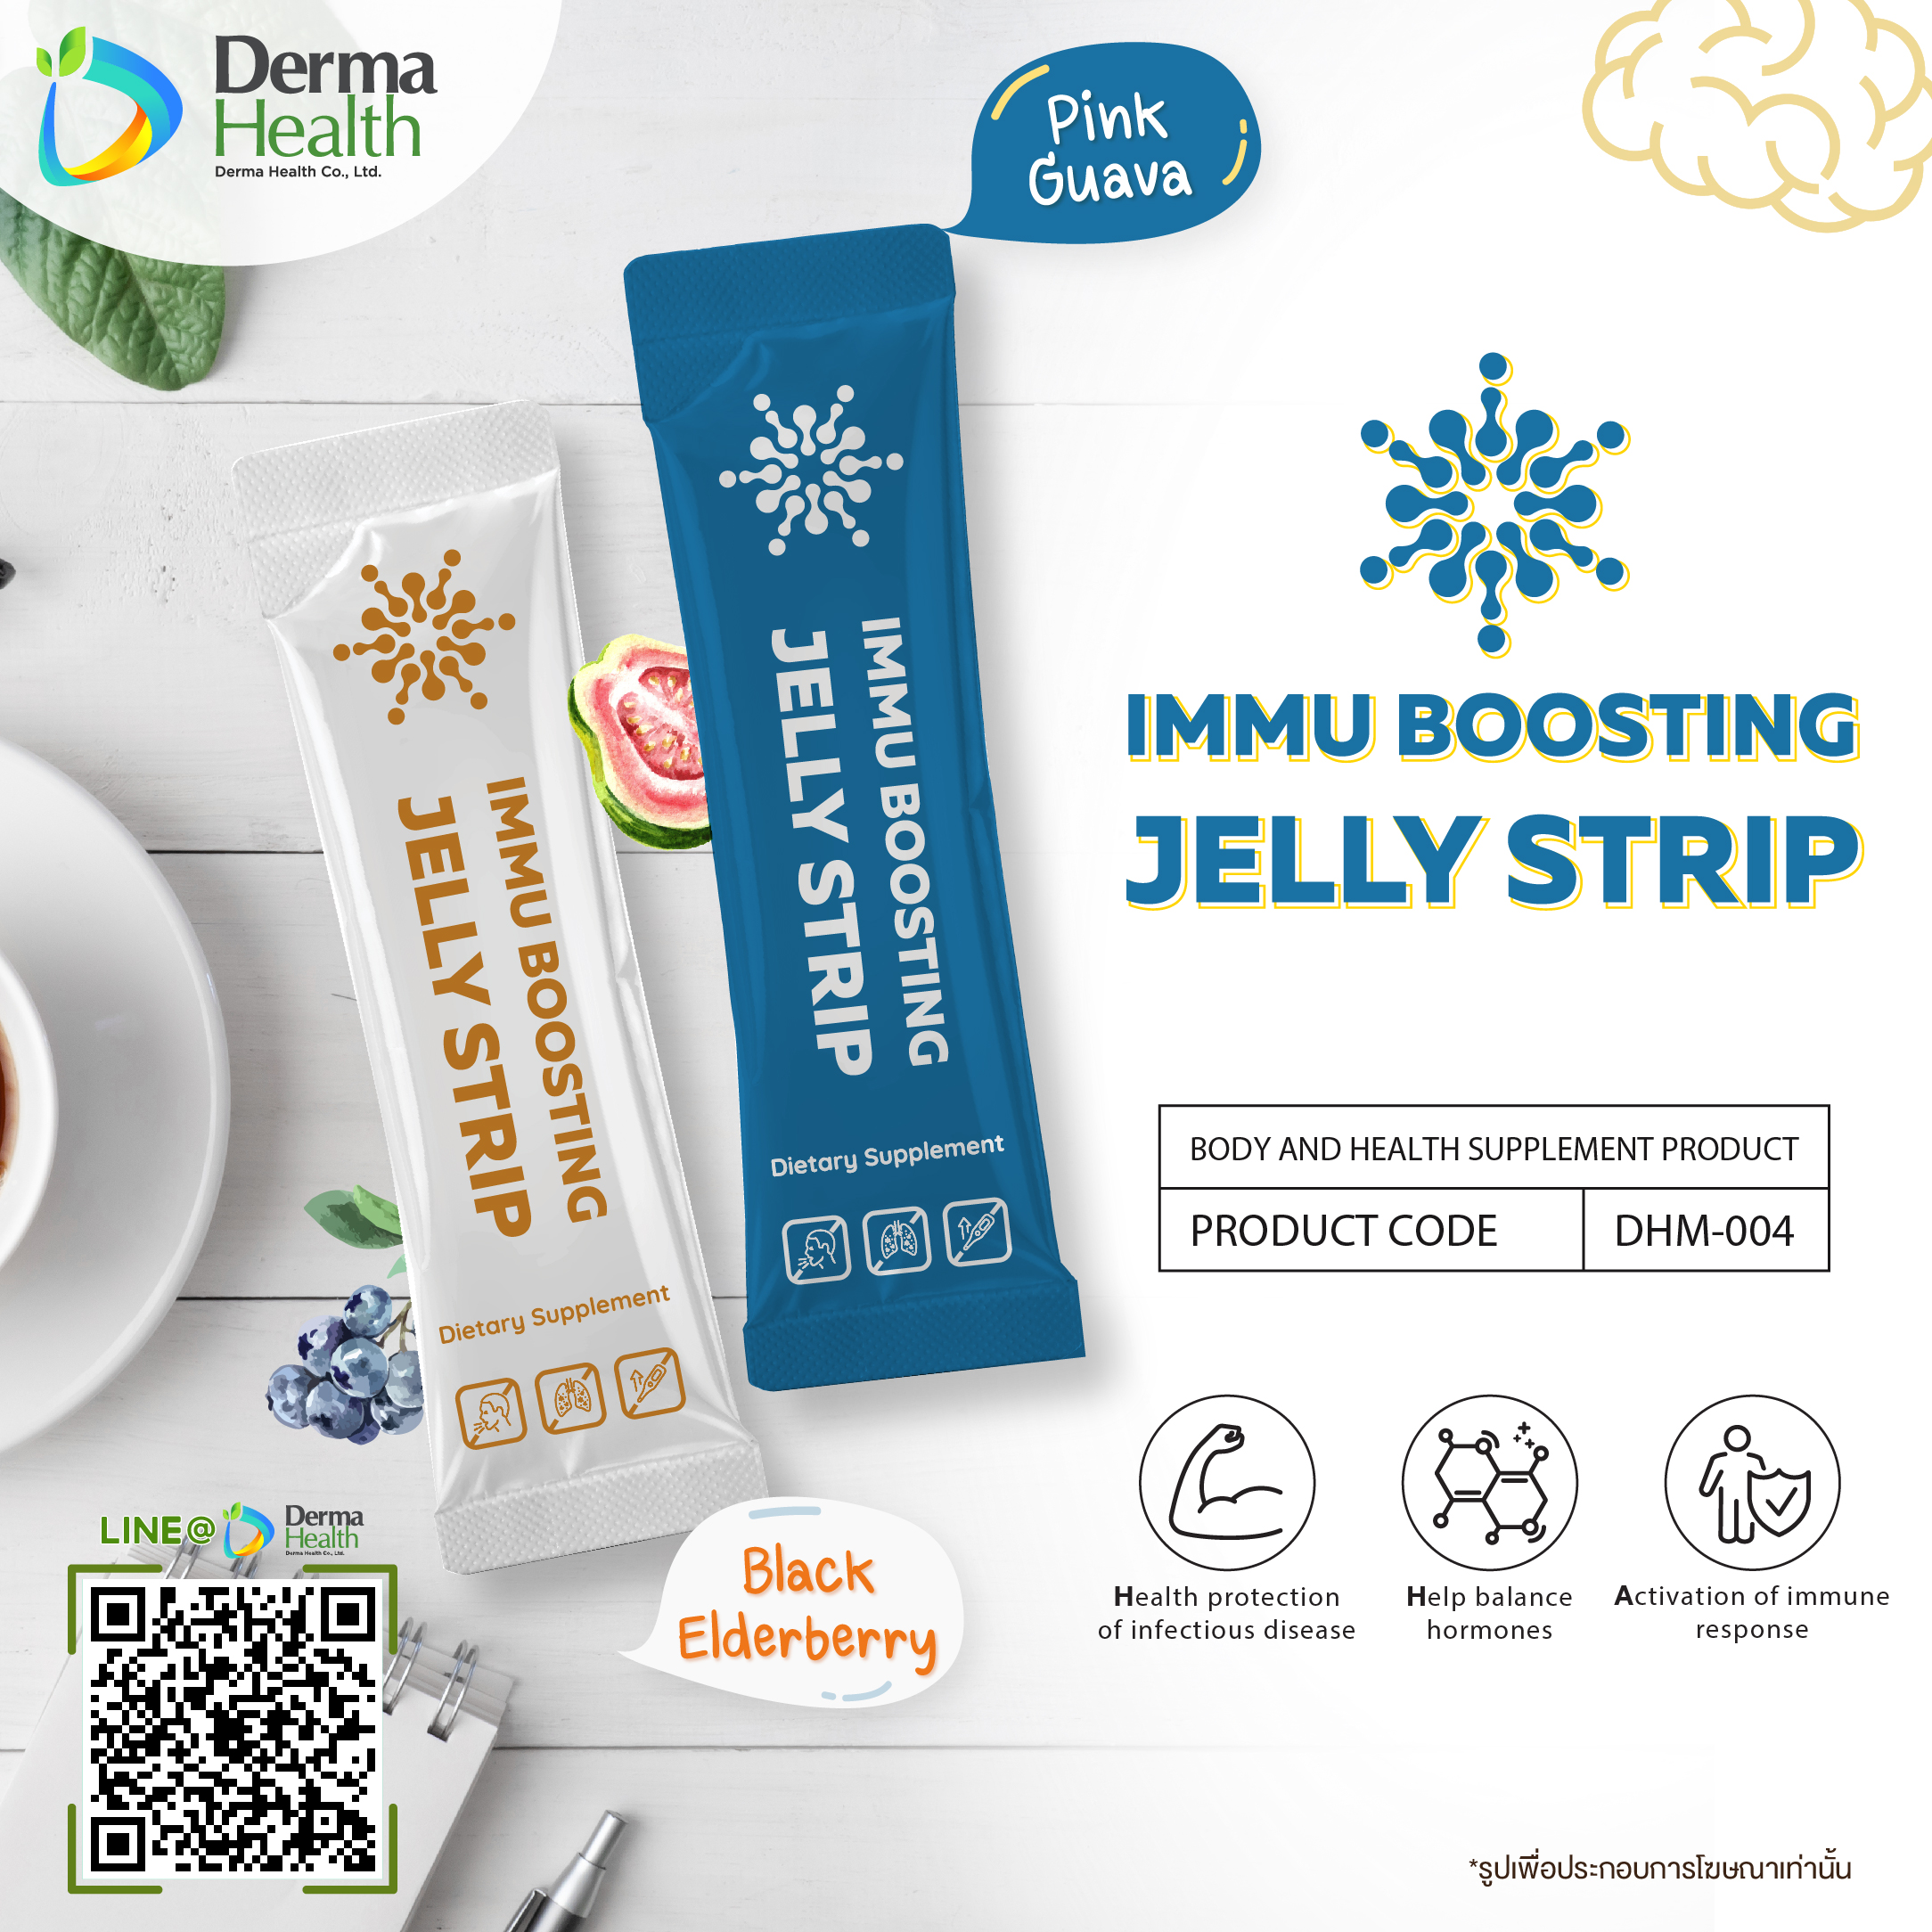 Immu Boosting Jelly Strip